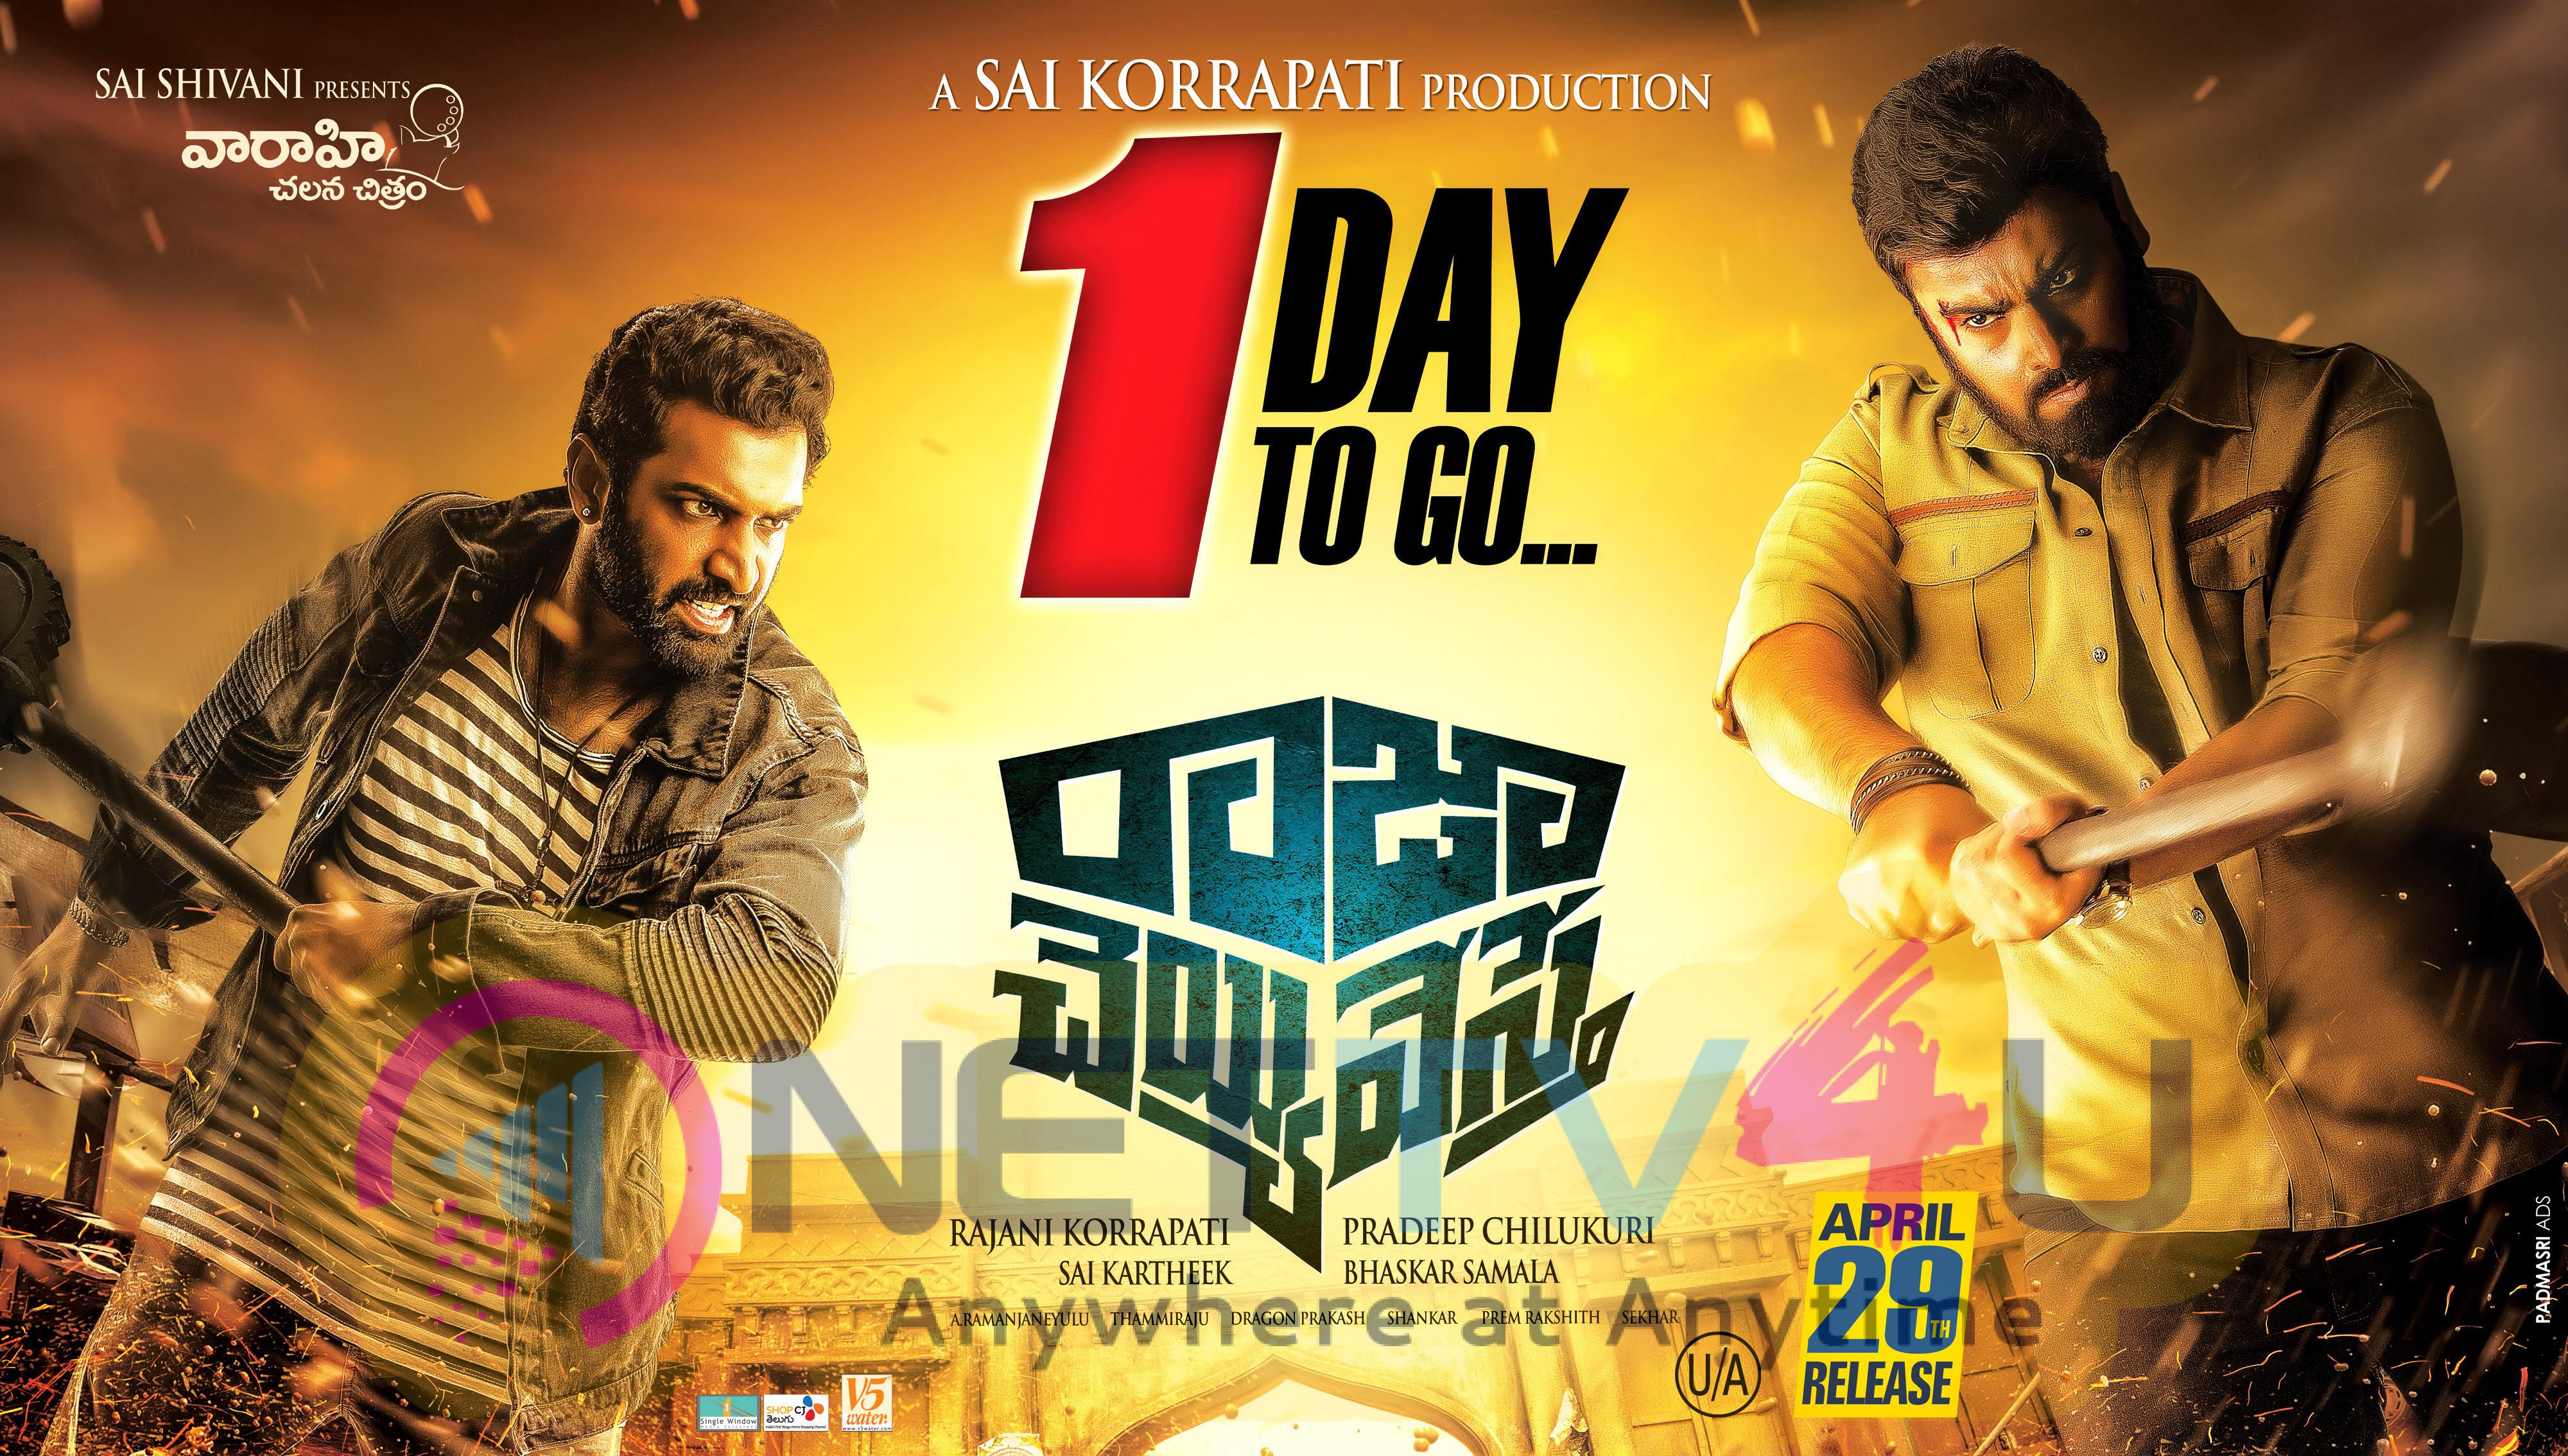 Telugu Movie Raja Cheyyi Veste 1 Day To Go Poster Telugu Gallery